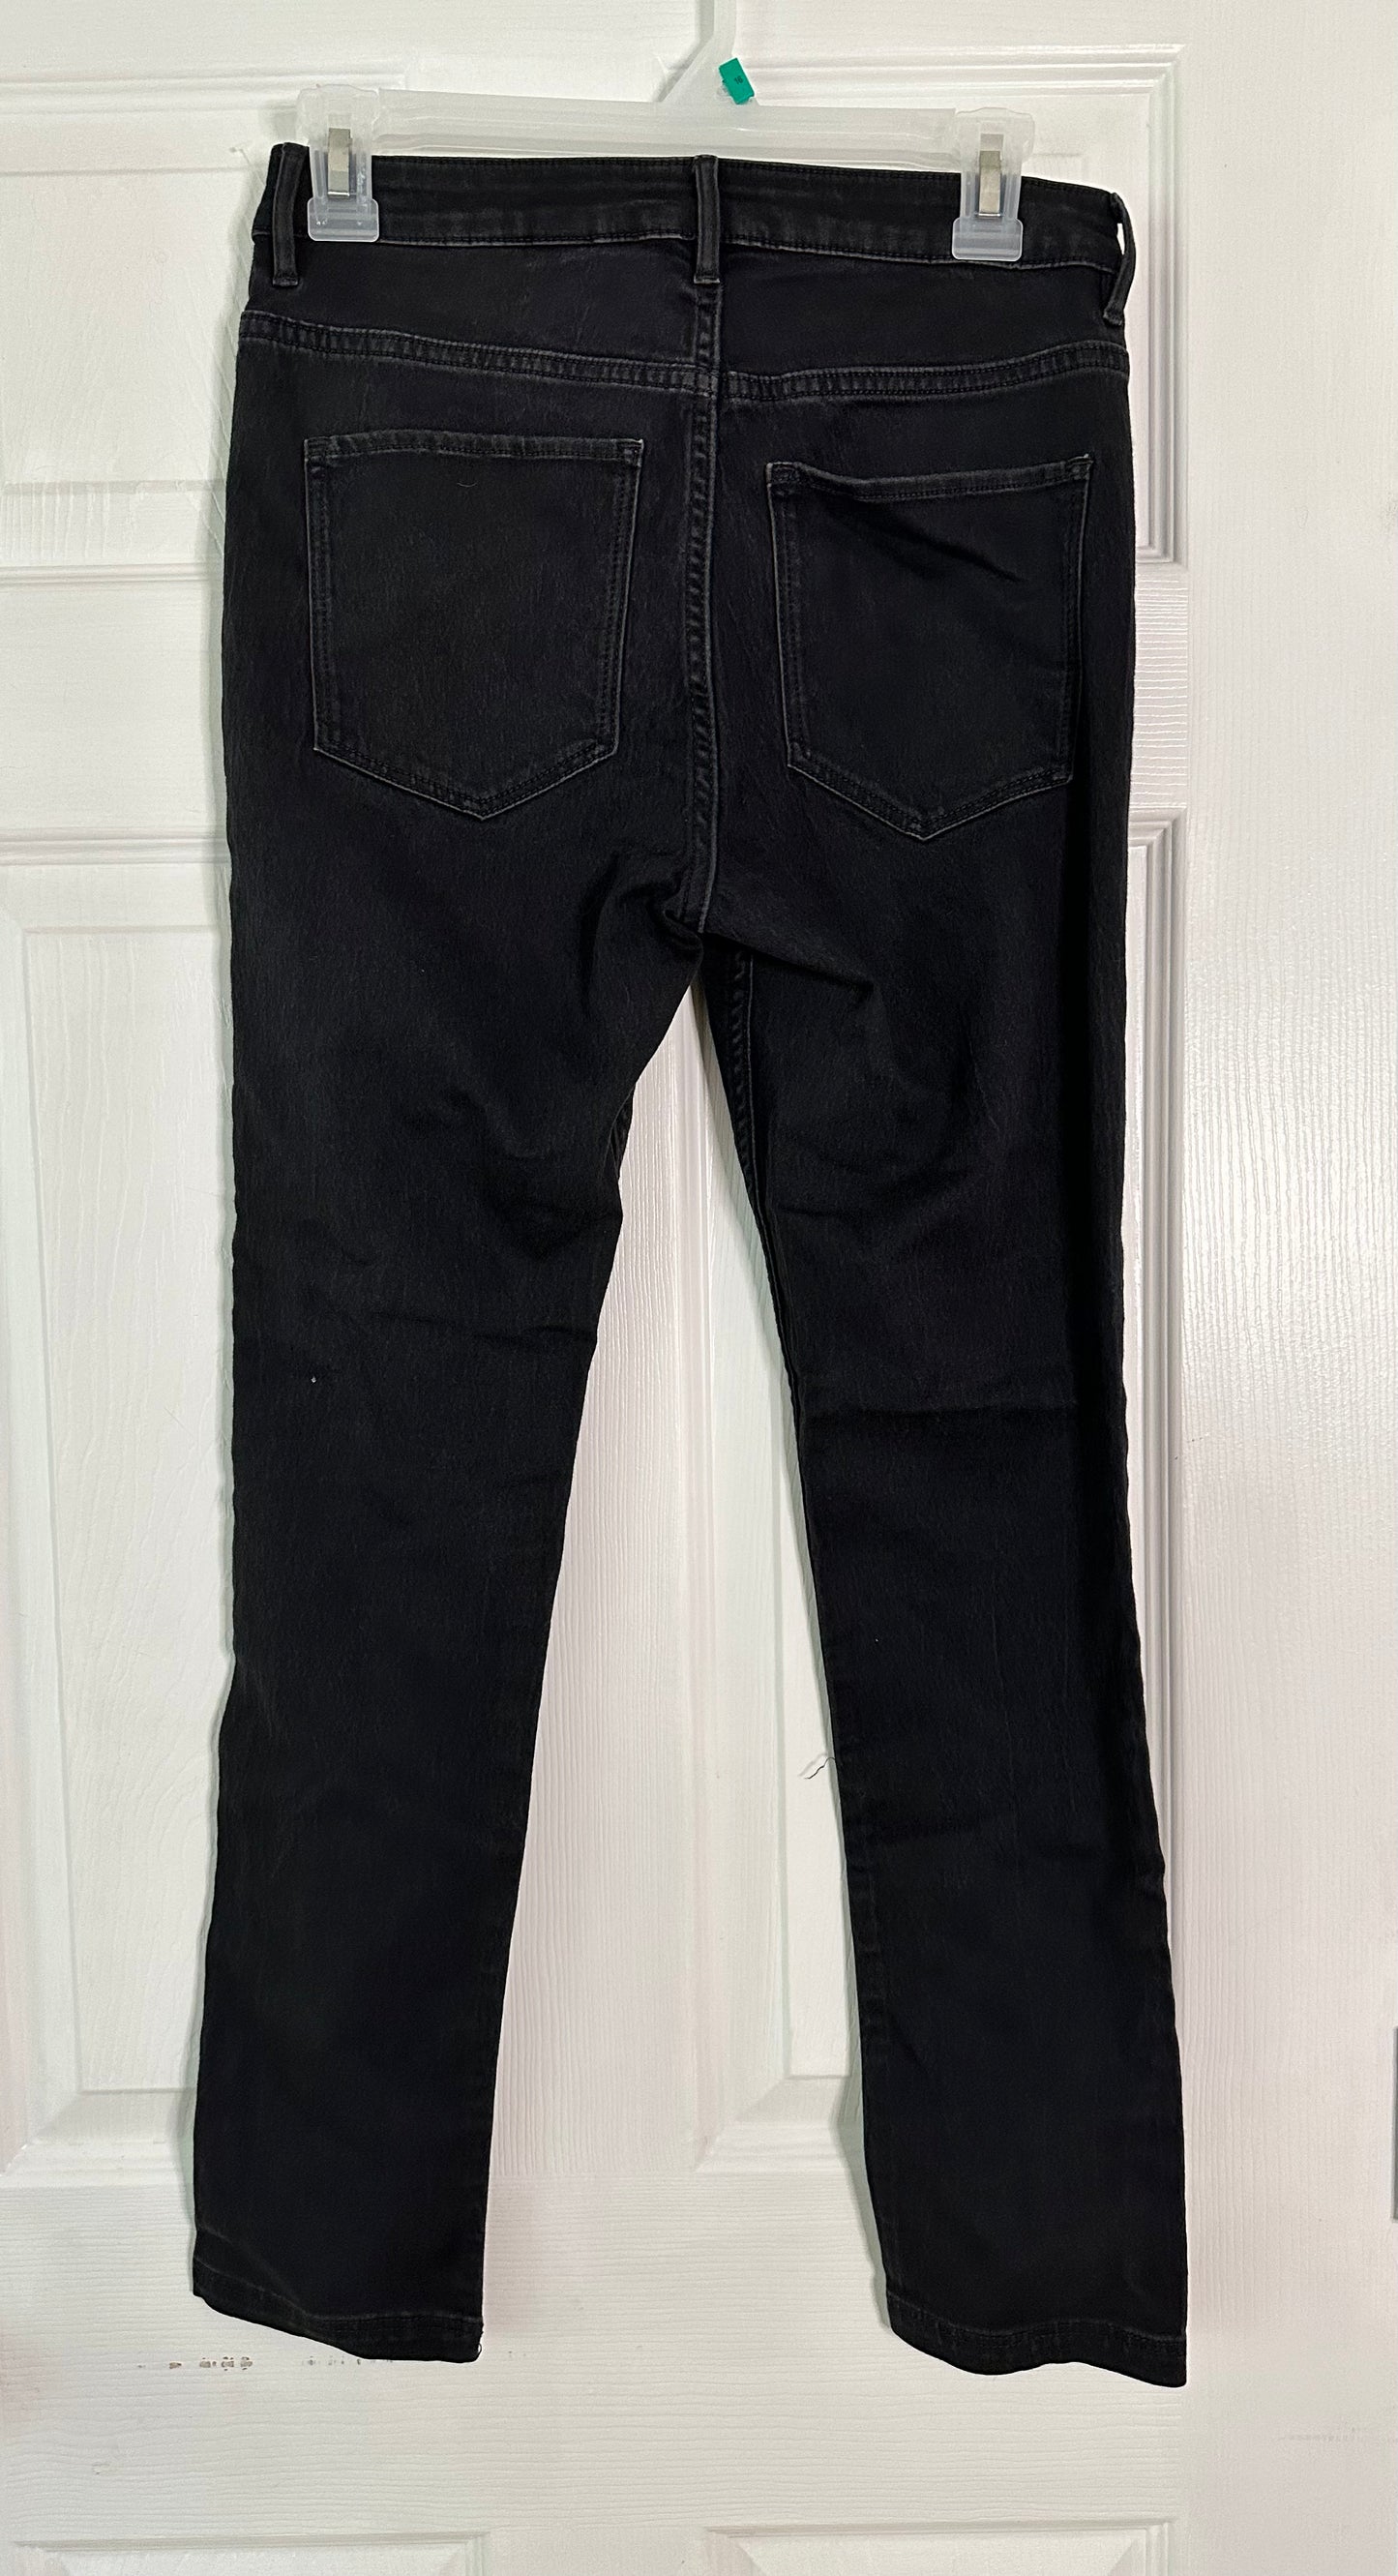 29/30 High Waisted Jeans